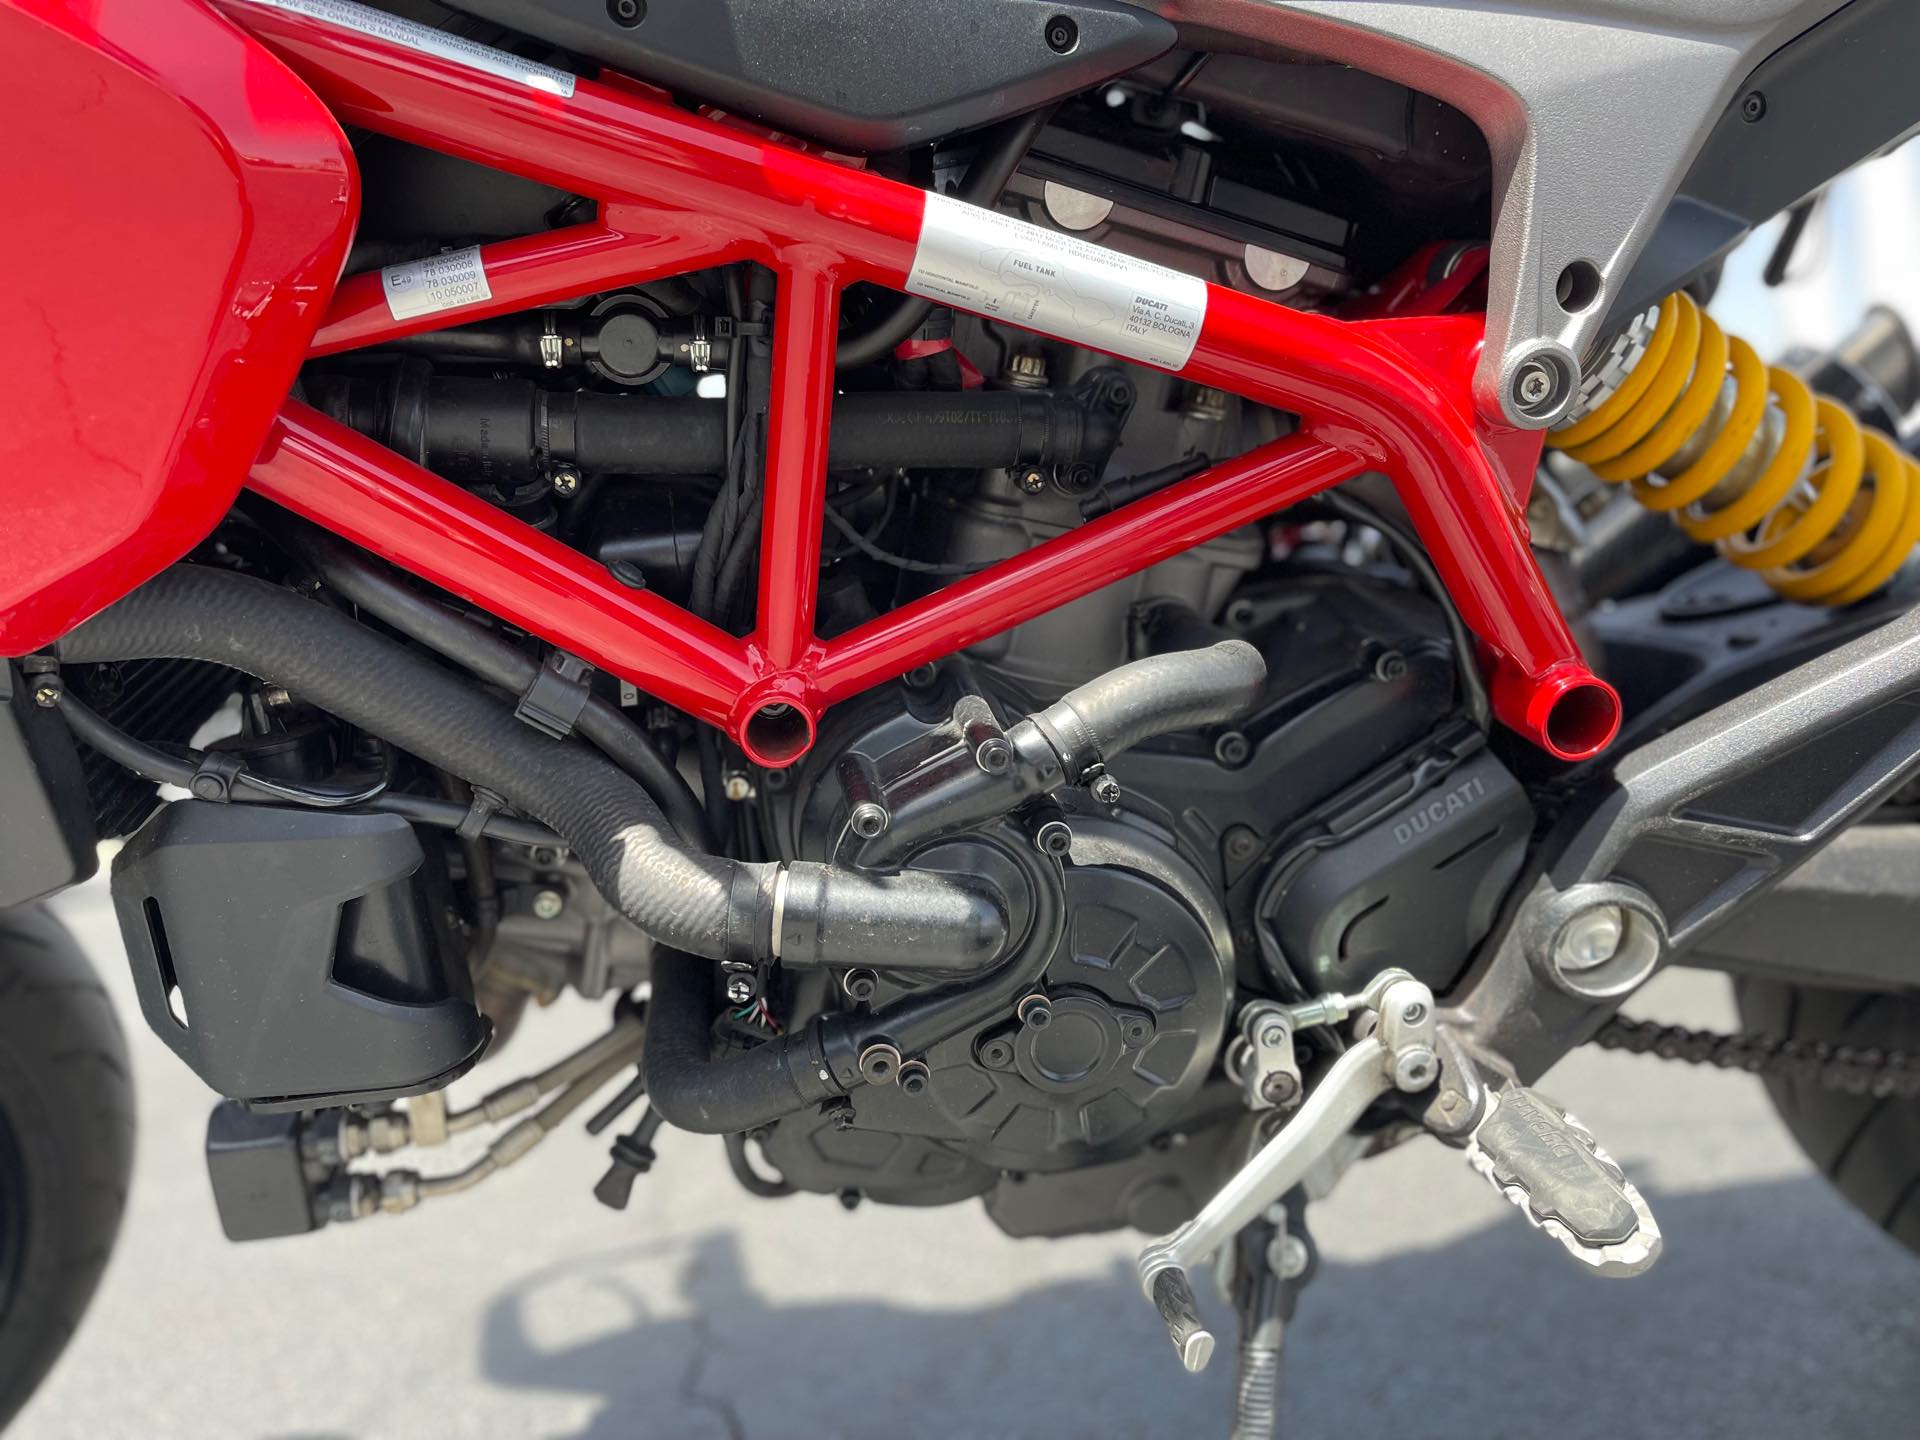 2017 Ducati Hypermotard 939 at Bobby J's Yamaha, Albuquerque, NM 87110